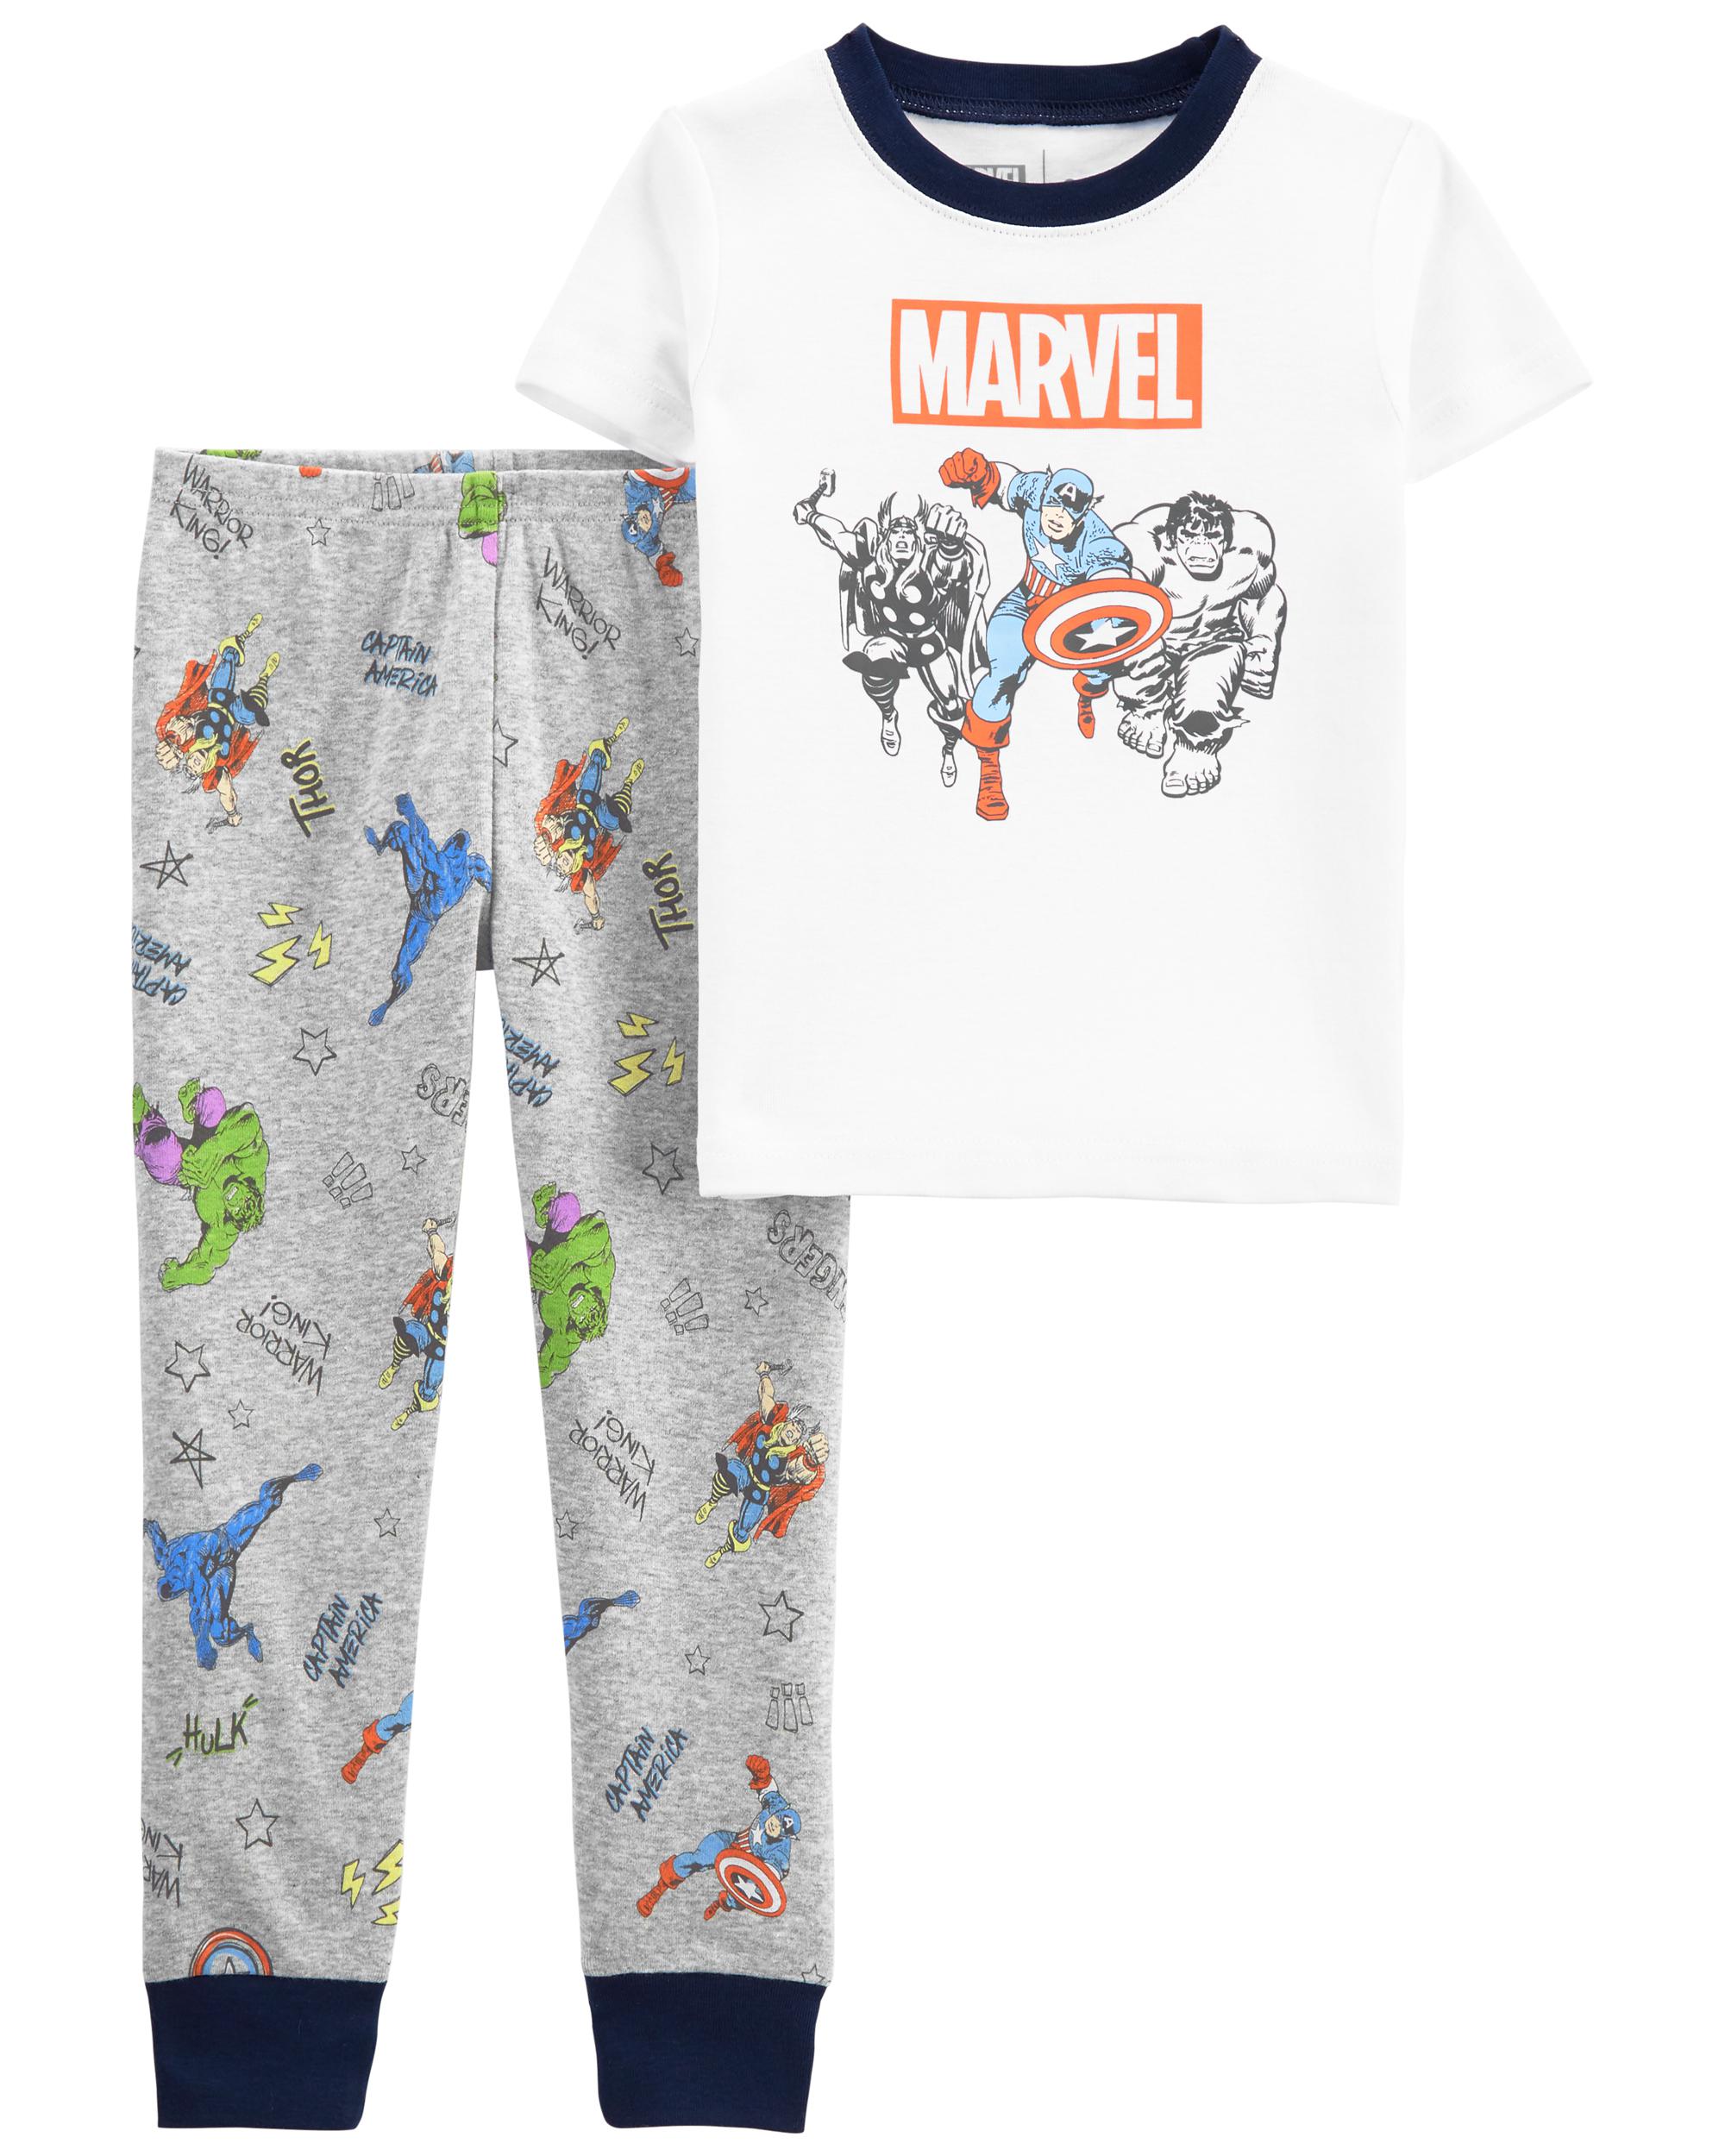 Toddler 2-Piece 100% Snug Fit Cotton Pyjamas